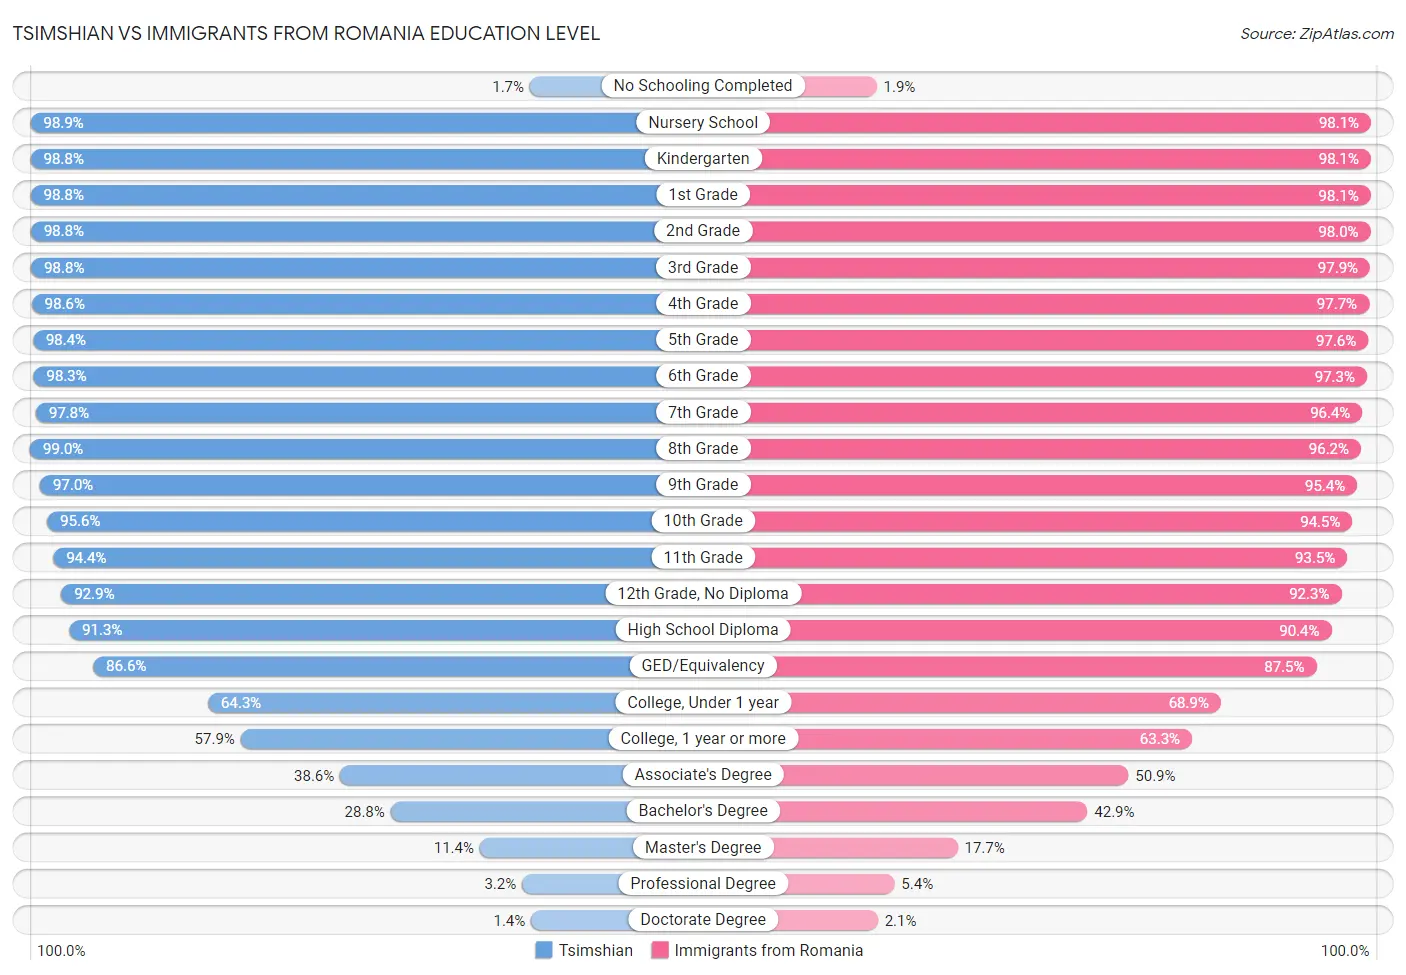 Tsimshian vs Immigrants from Romania Education Level